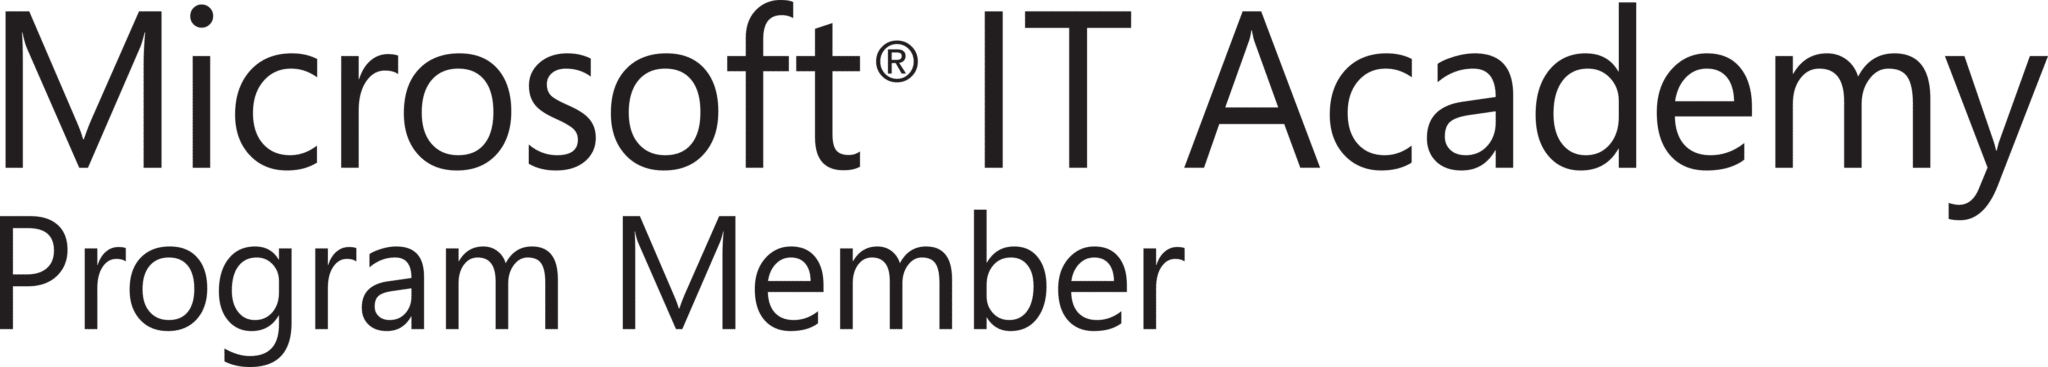 Microsoft IT Academy Program Member Logo